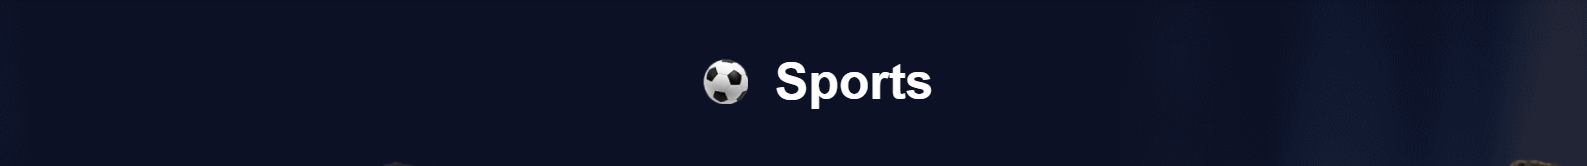 sports_banner